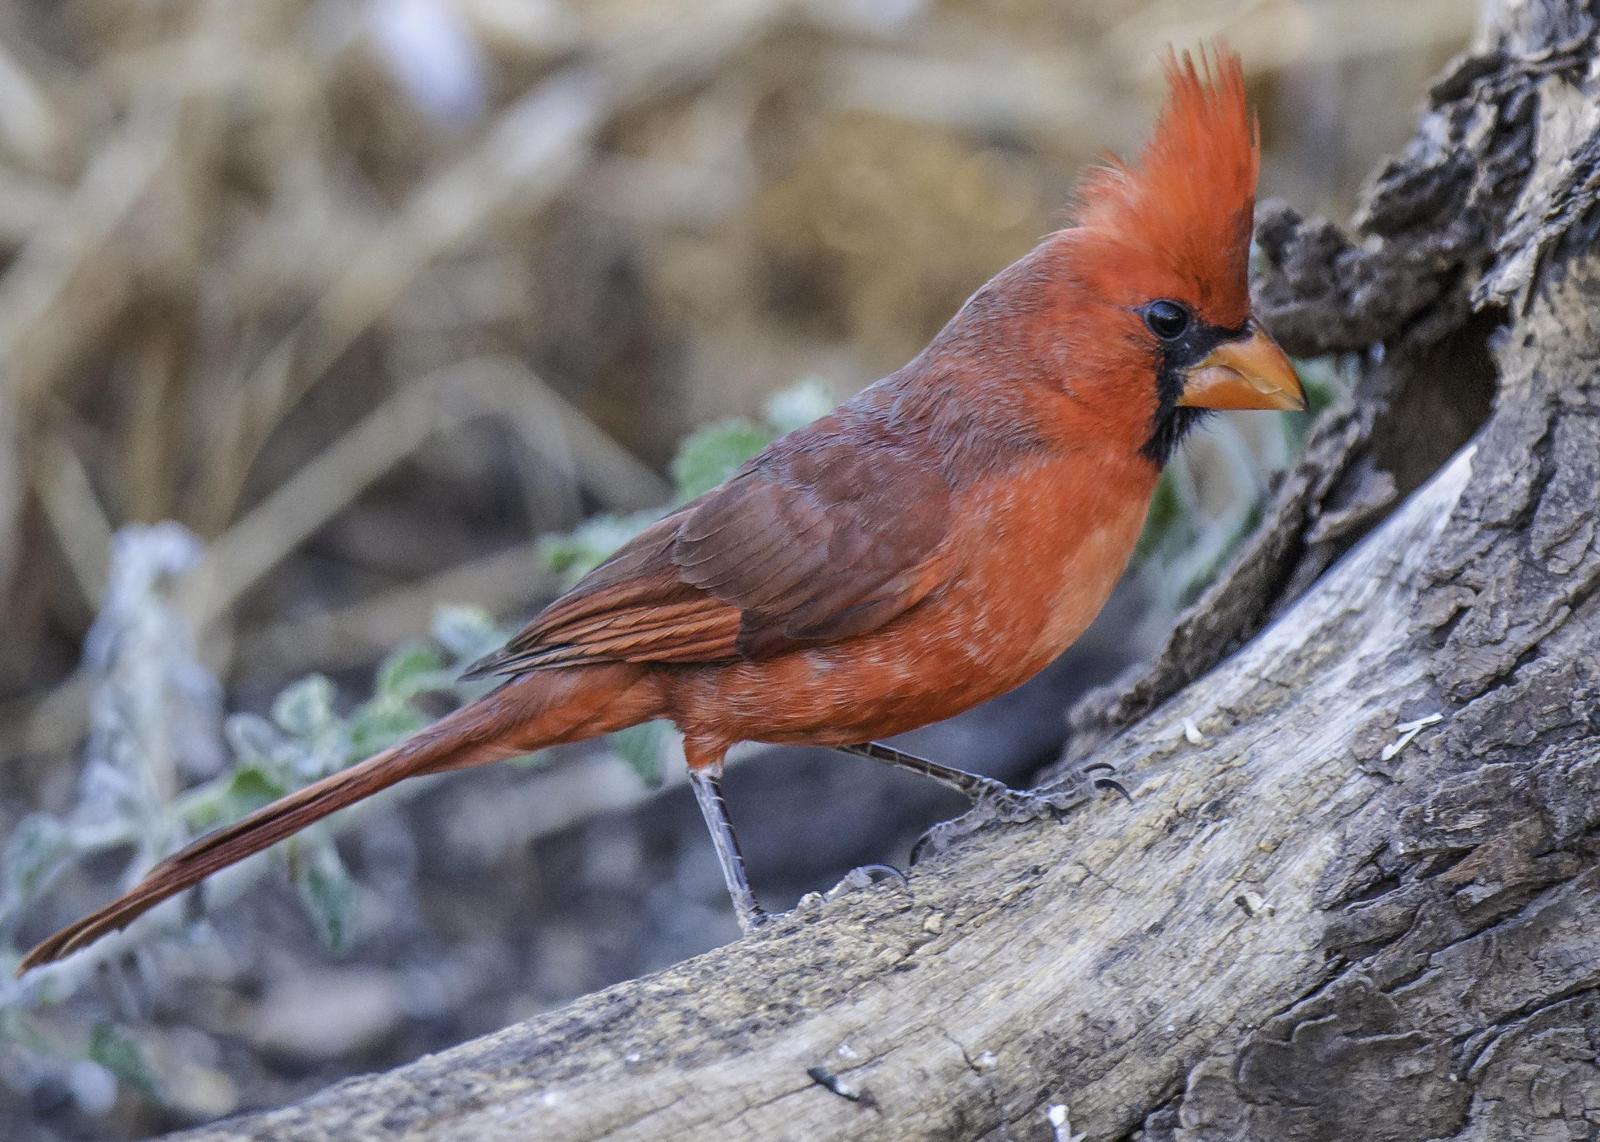 Northern Cardinal Photo by Mason Rose